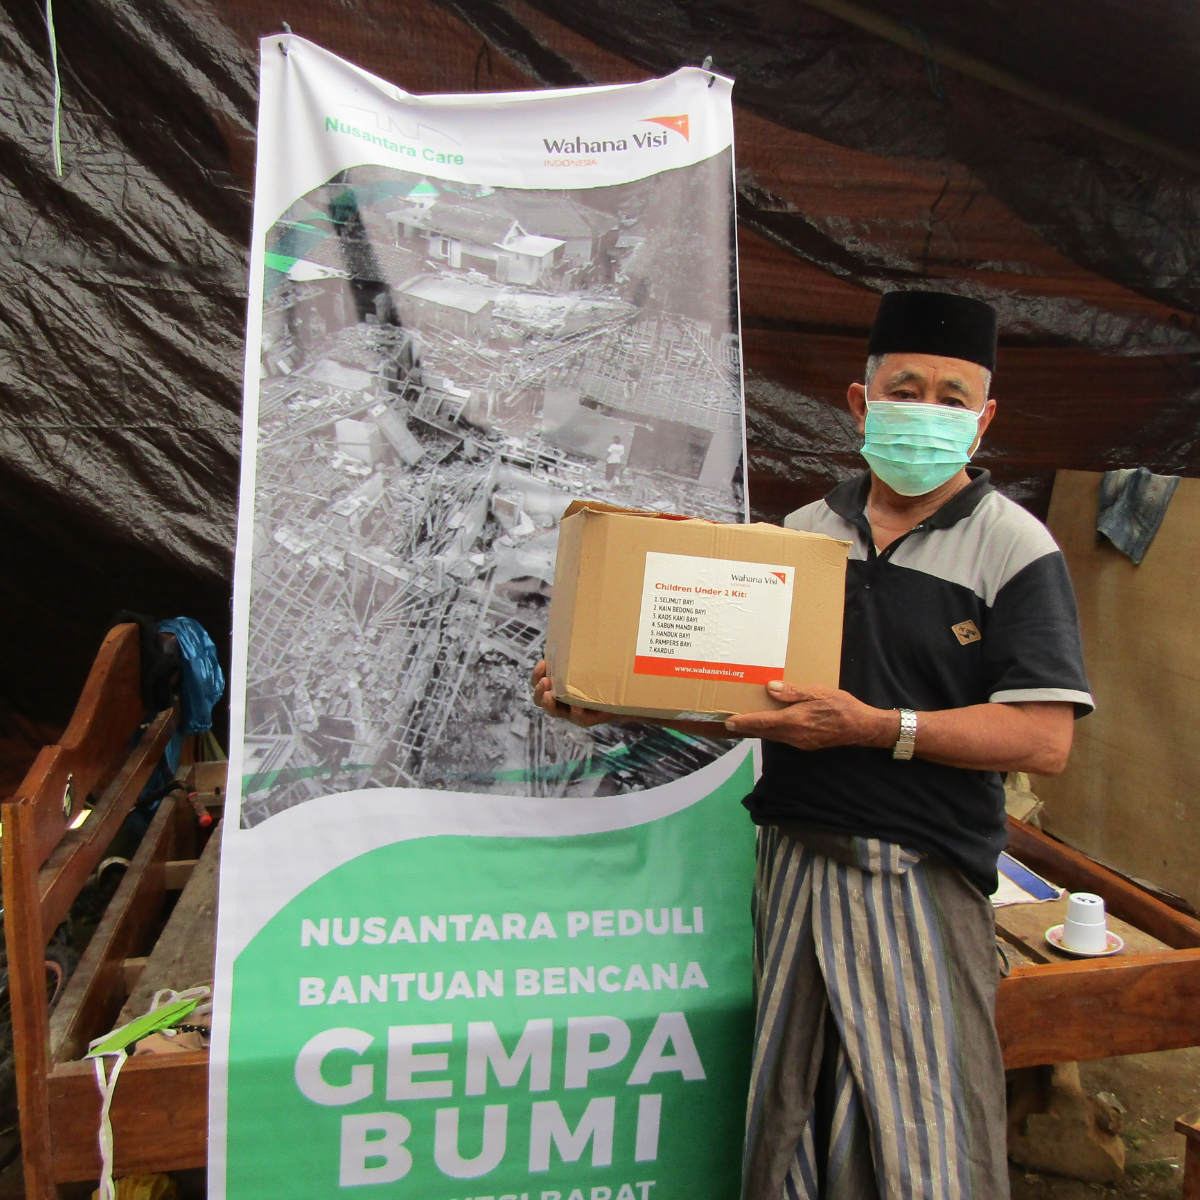 Nusantara Care Responds to West Sulawesi Earthquake